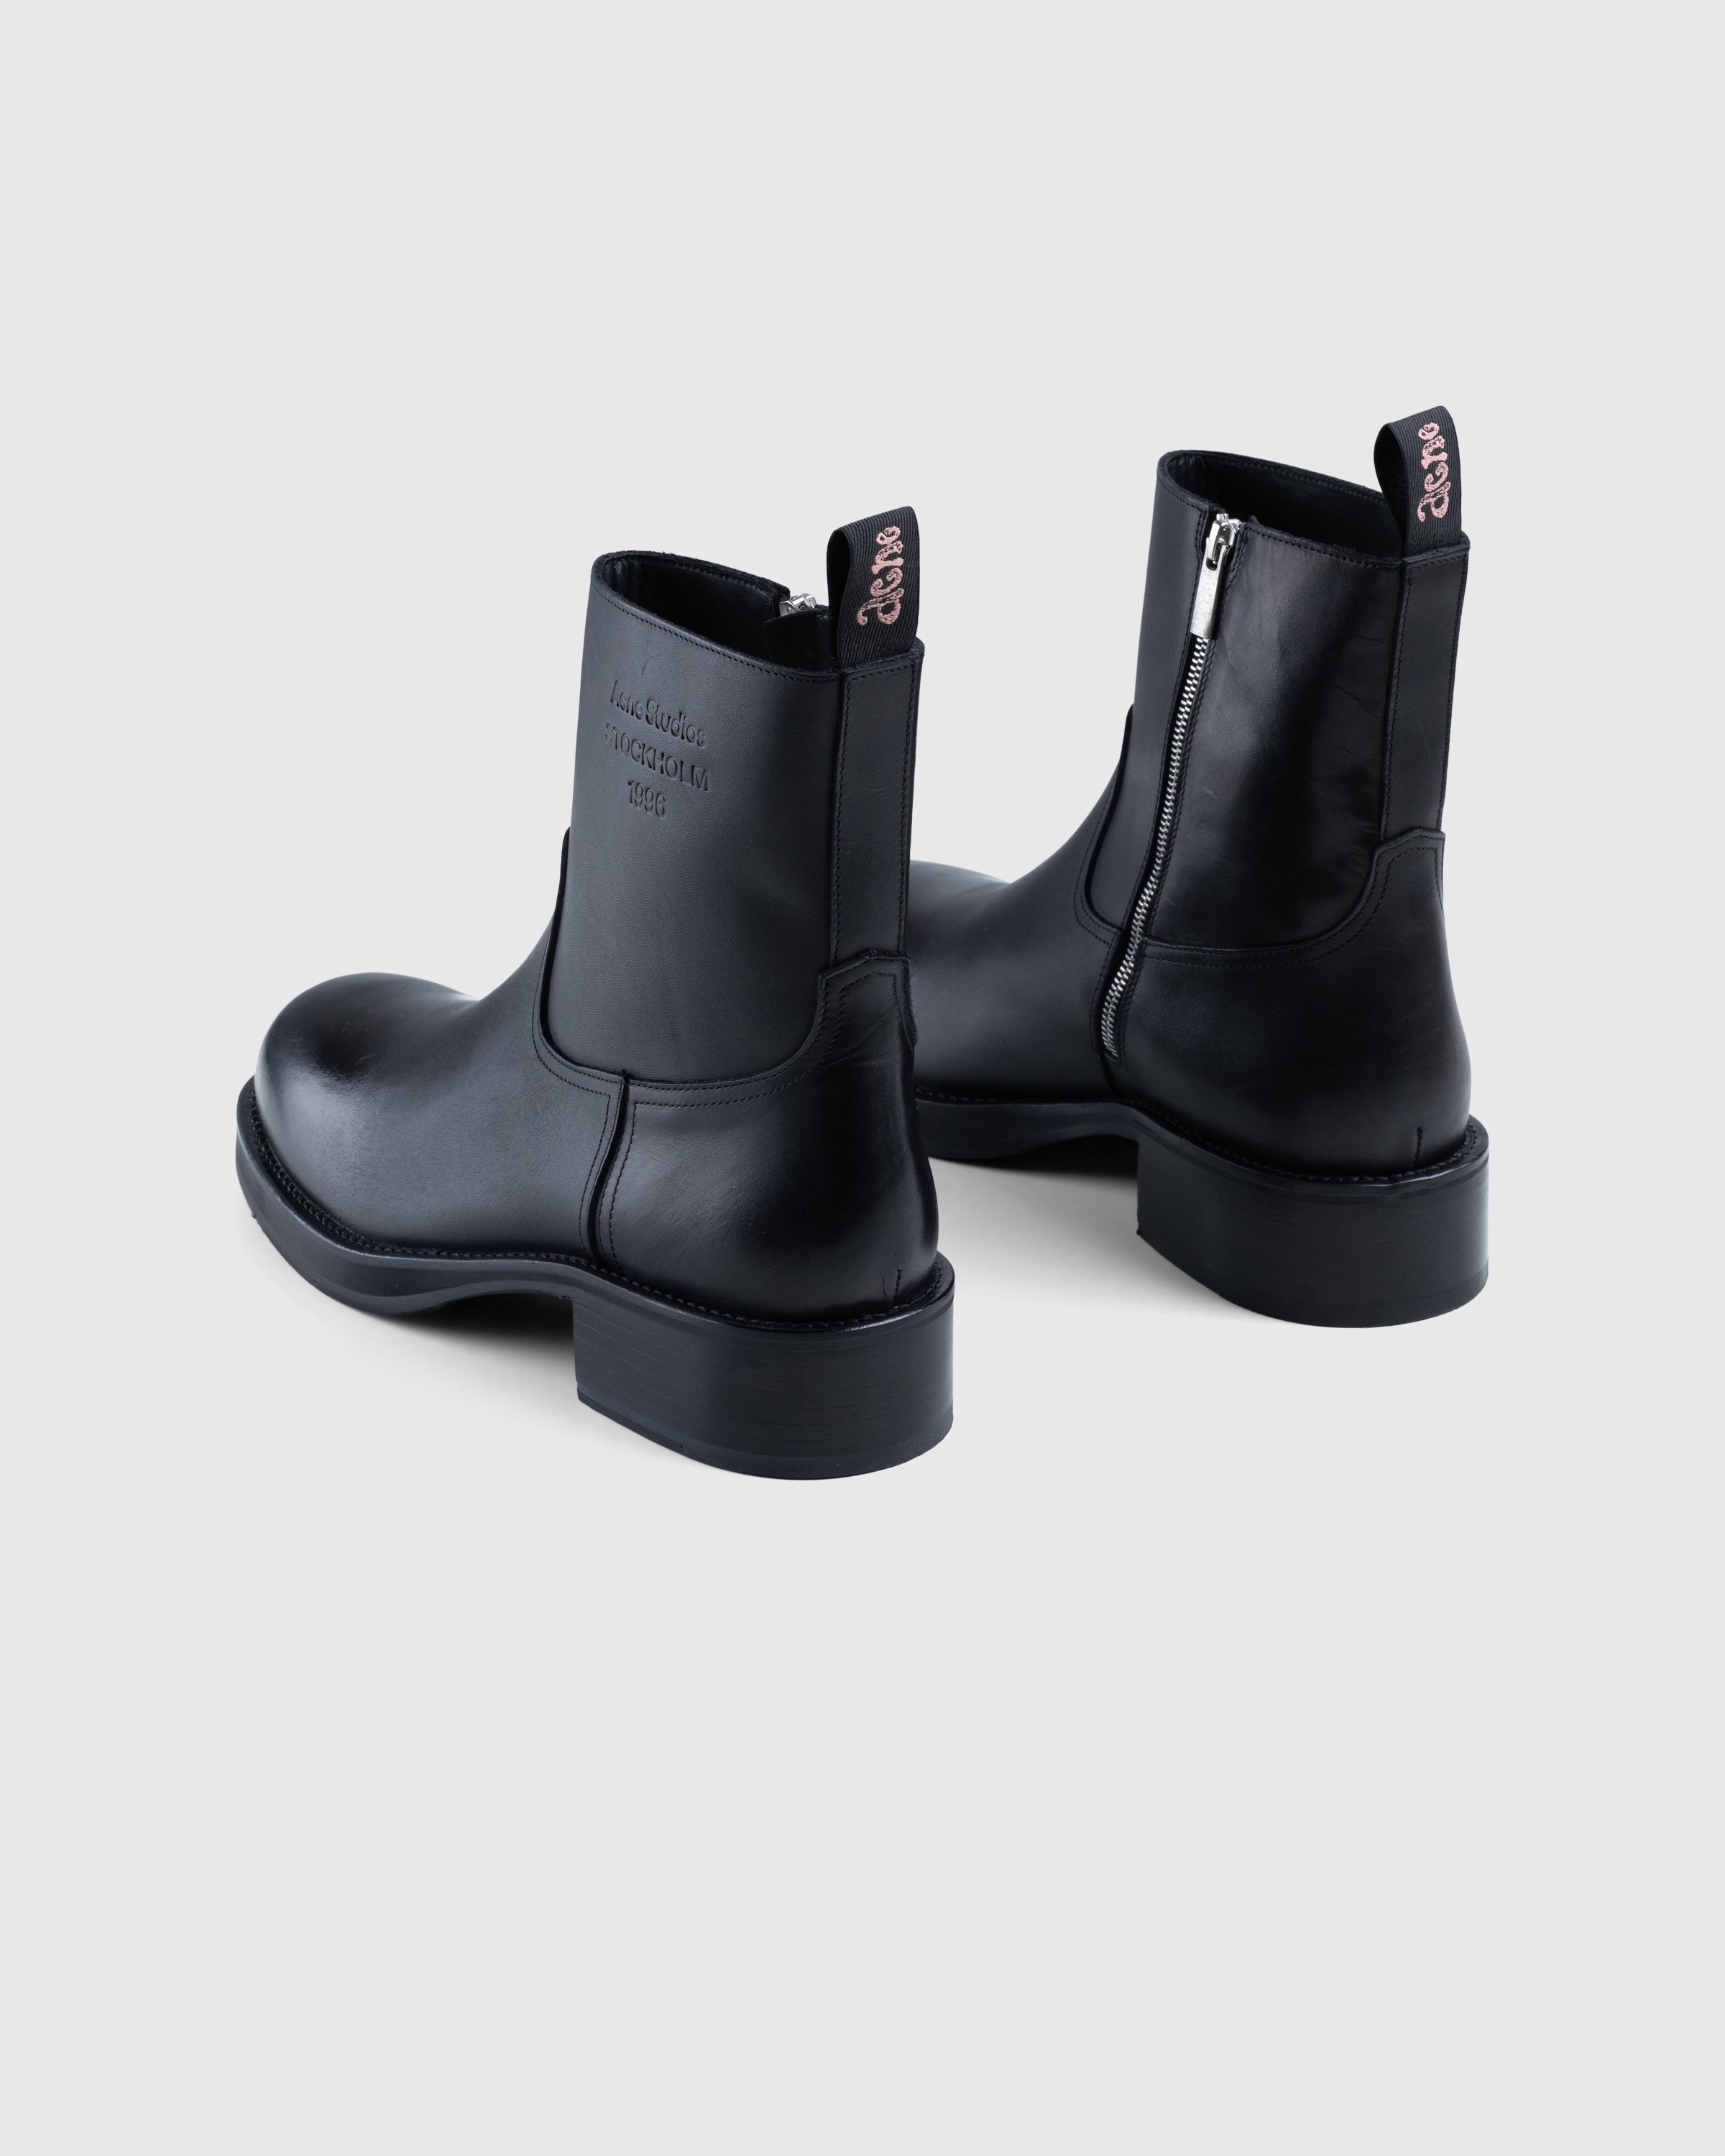 Acne Studios - Sprayed Leather Ankle Boots Black - Footwear - Black - Image 4